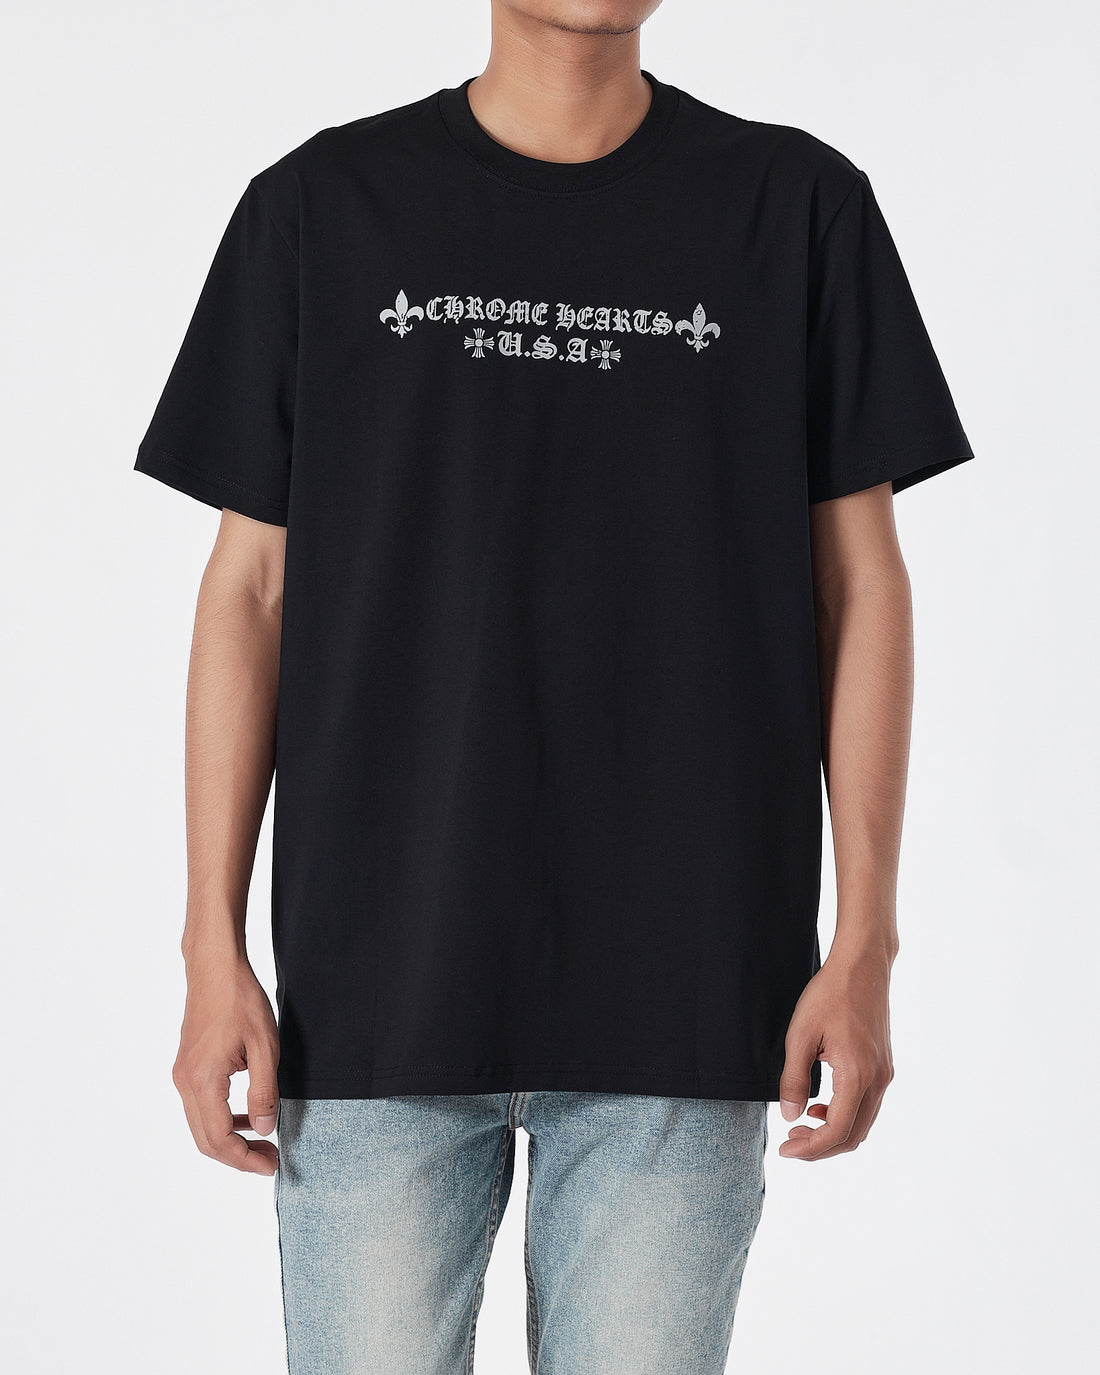 CH Cross Back Logo Printed Men Black T-Shirt 16.90